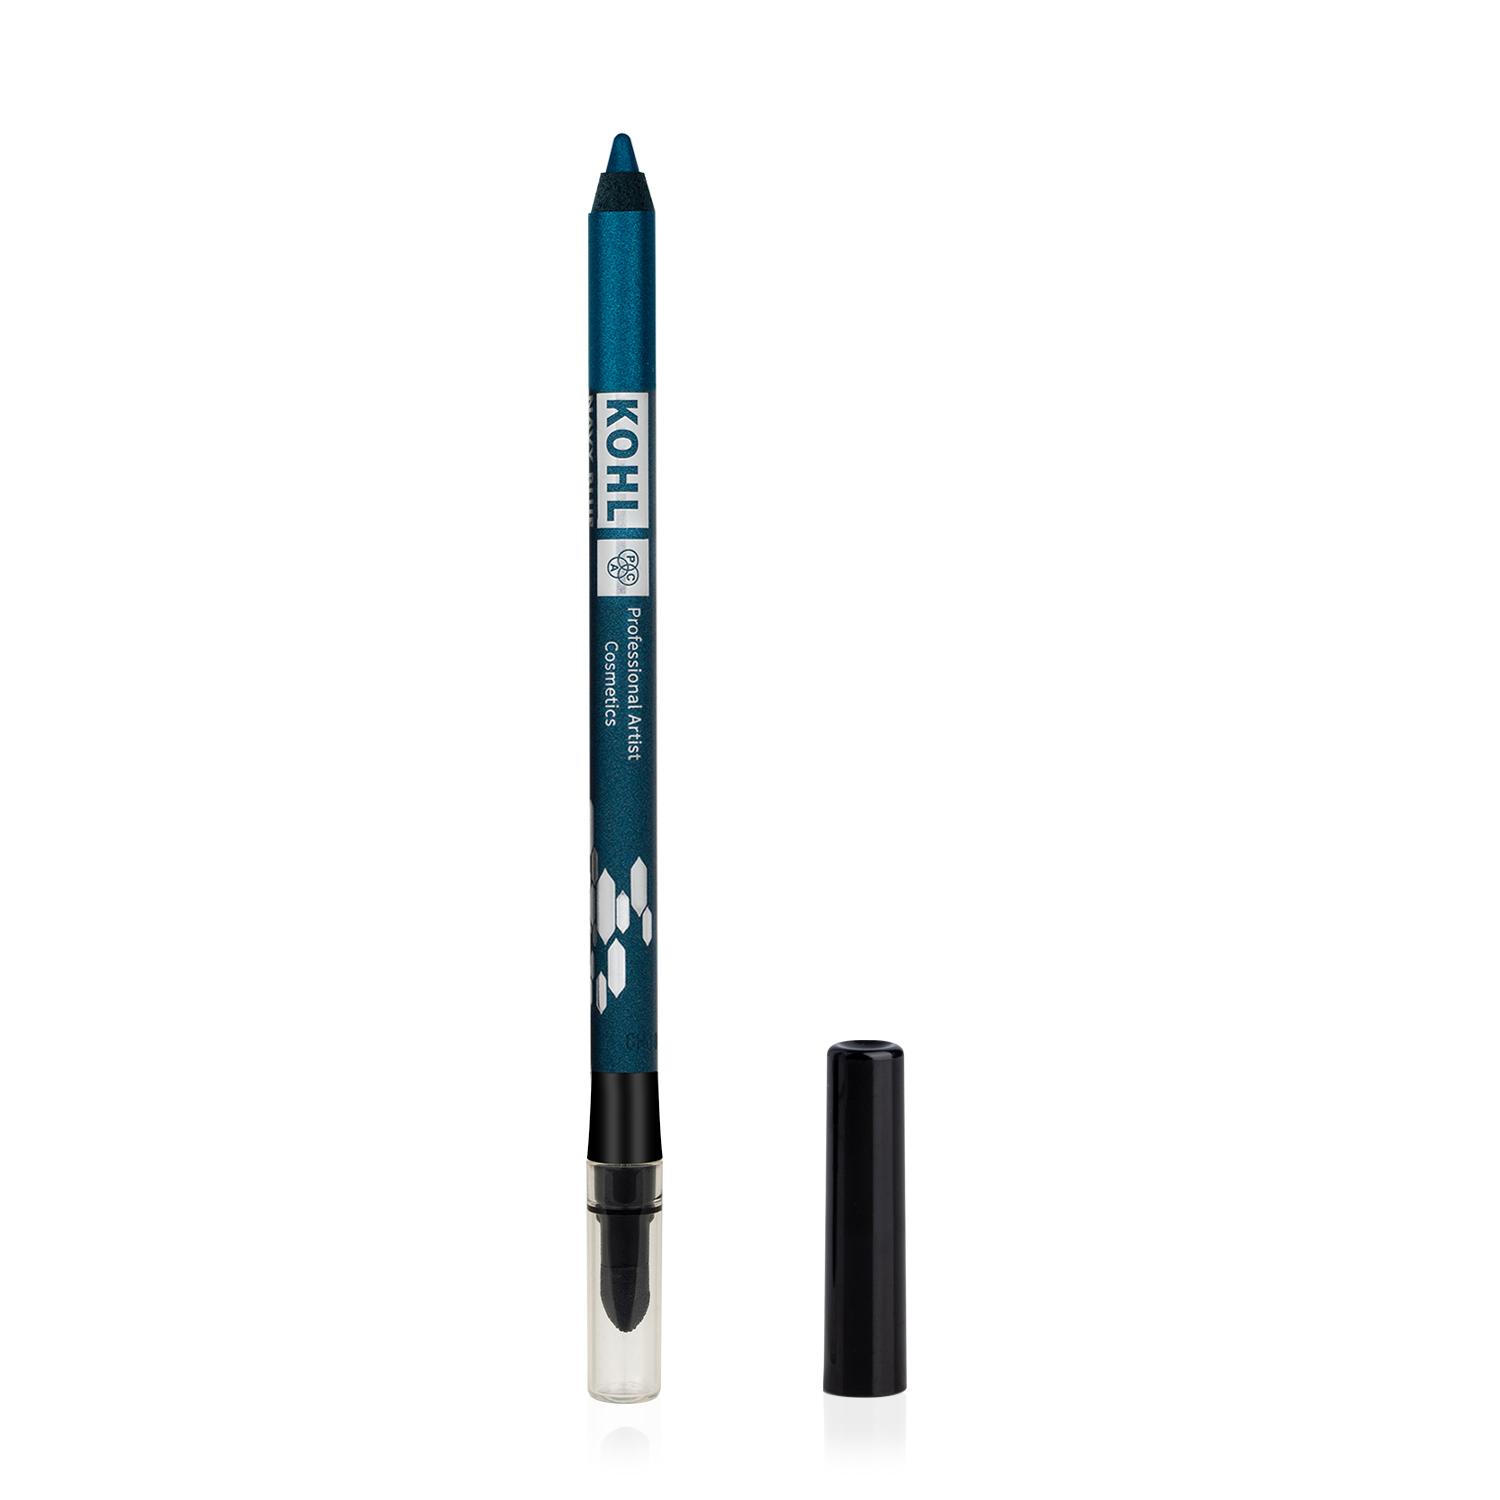 PAC | PAC Longlasting Kohl Pencil - Navy Blue (1.2g)